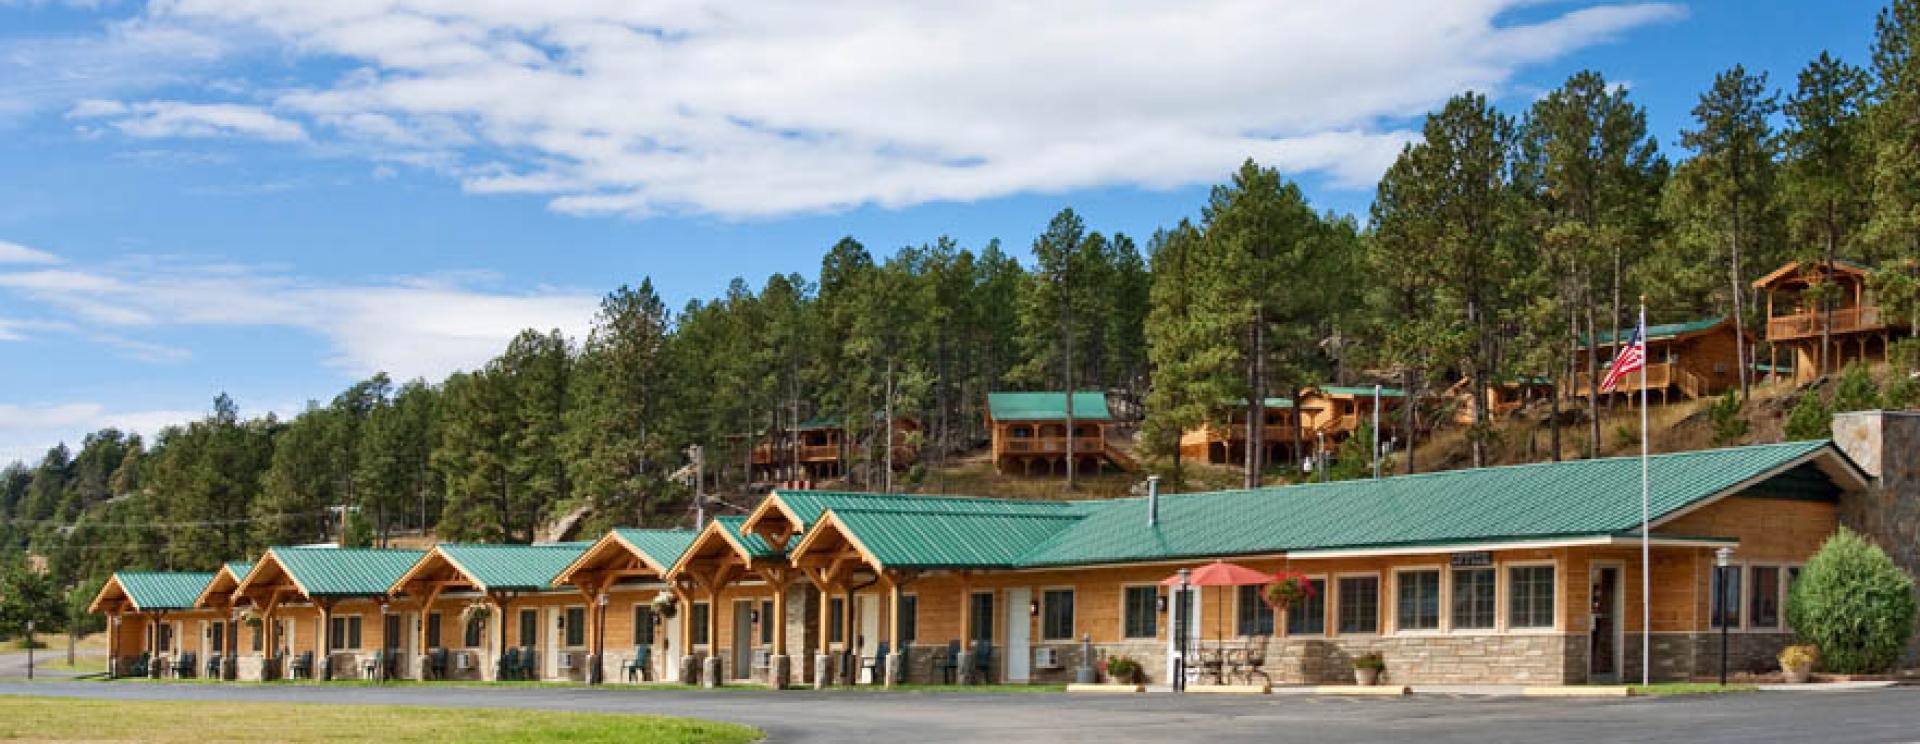 Rock Crest Lodge & Cabins